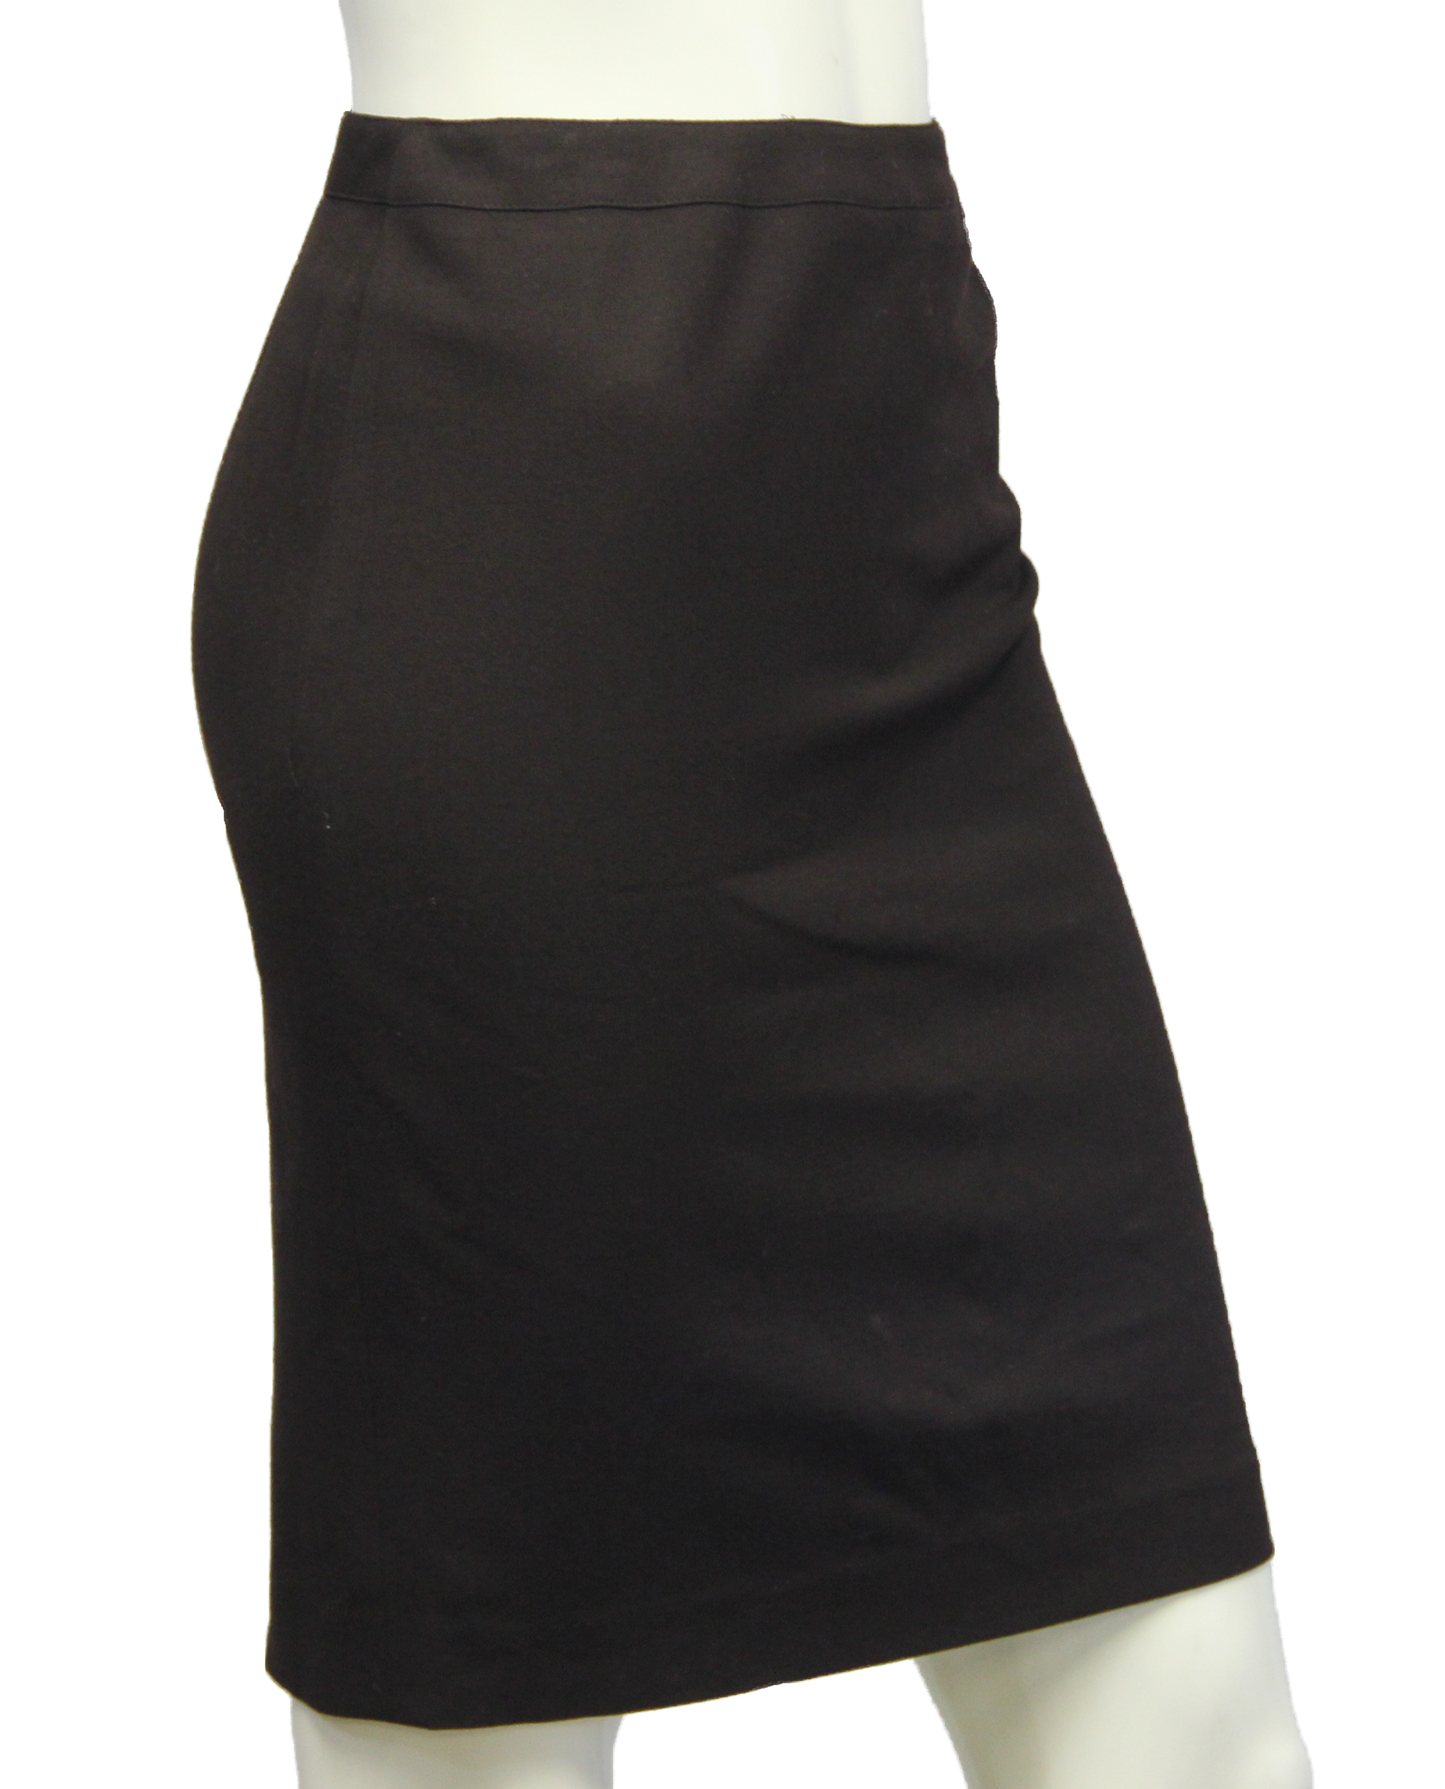 Ellen Tracy Work It Brown Skirt Size 2p (SKU 000094) - Designers On A Dime - 2